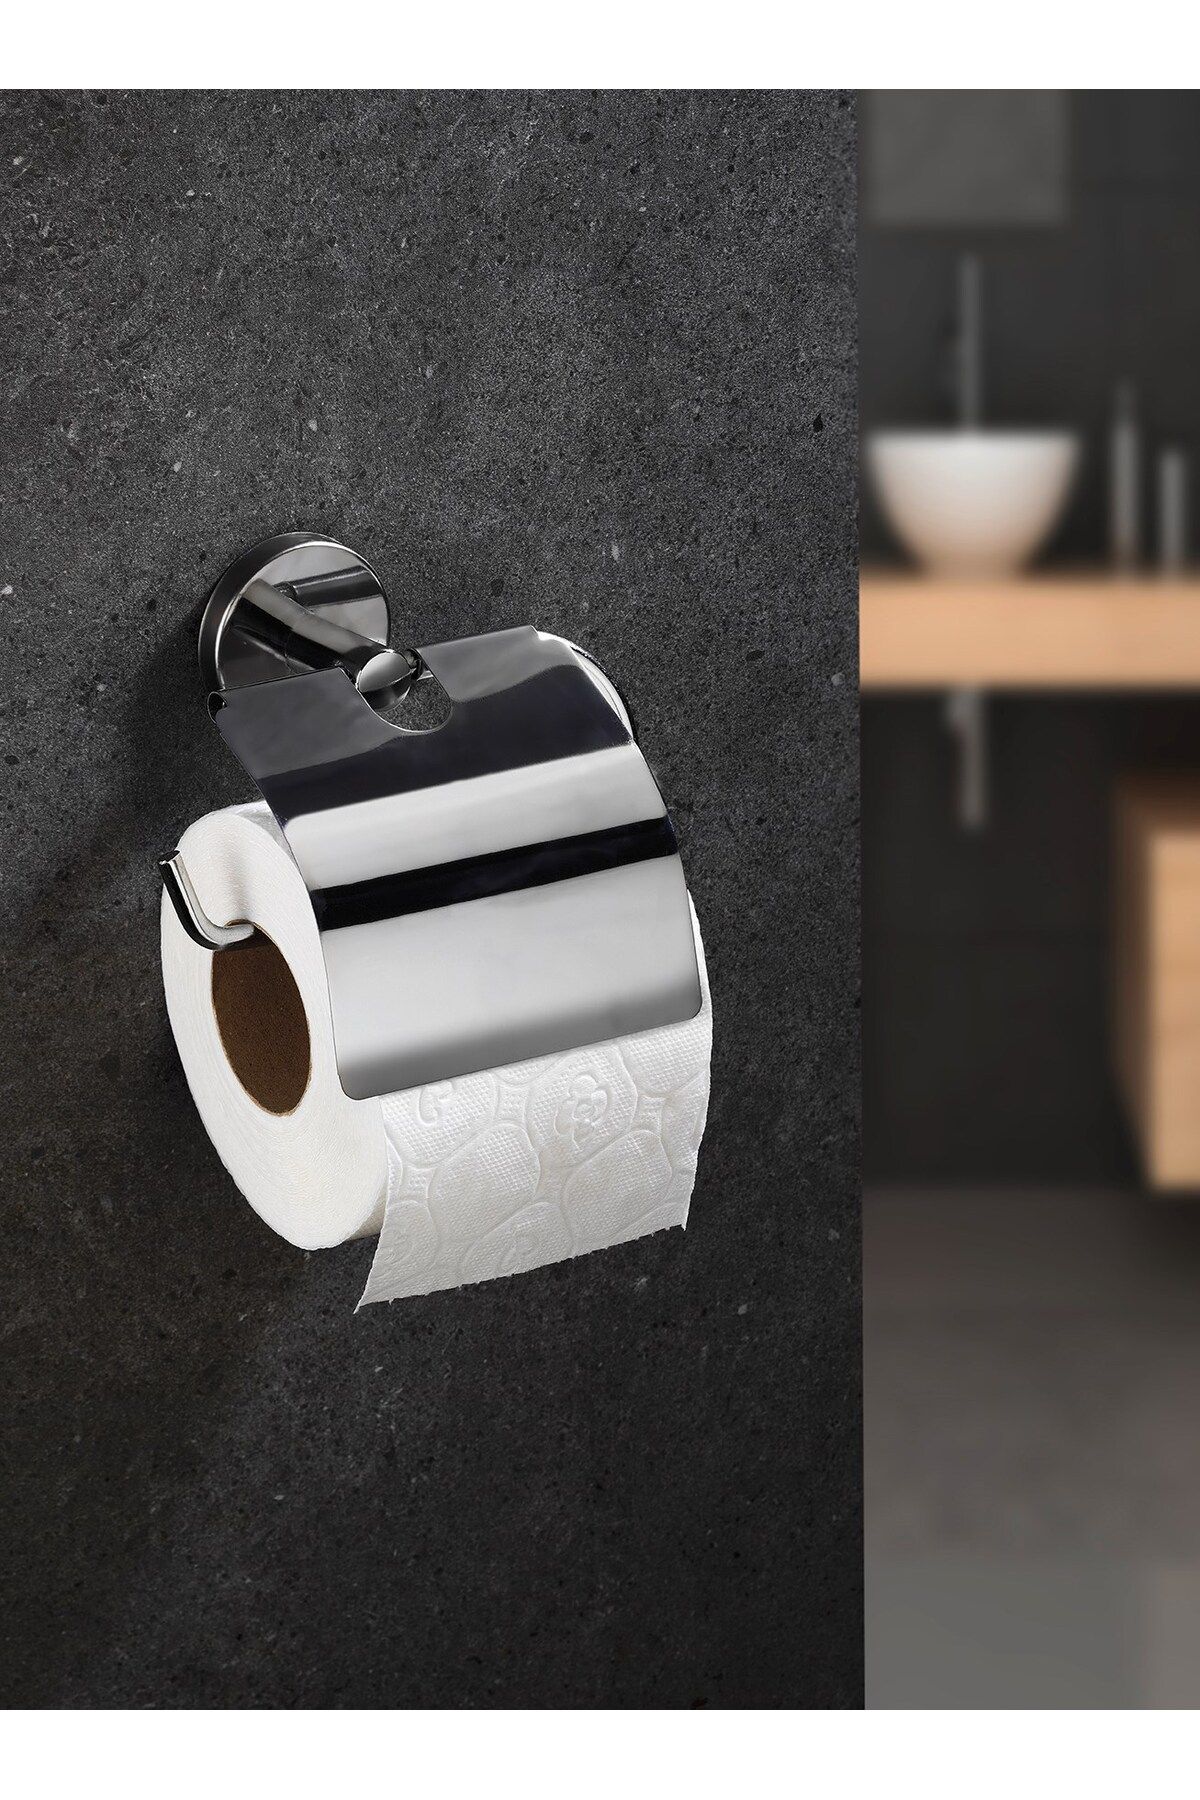 Sas Haus Delmeye Son Yapışkanlı Tuvalet Kağıtlığı Wc Kağıtlık Tutucu Krom Yk-703